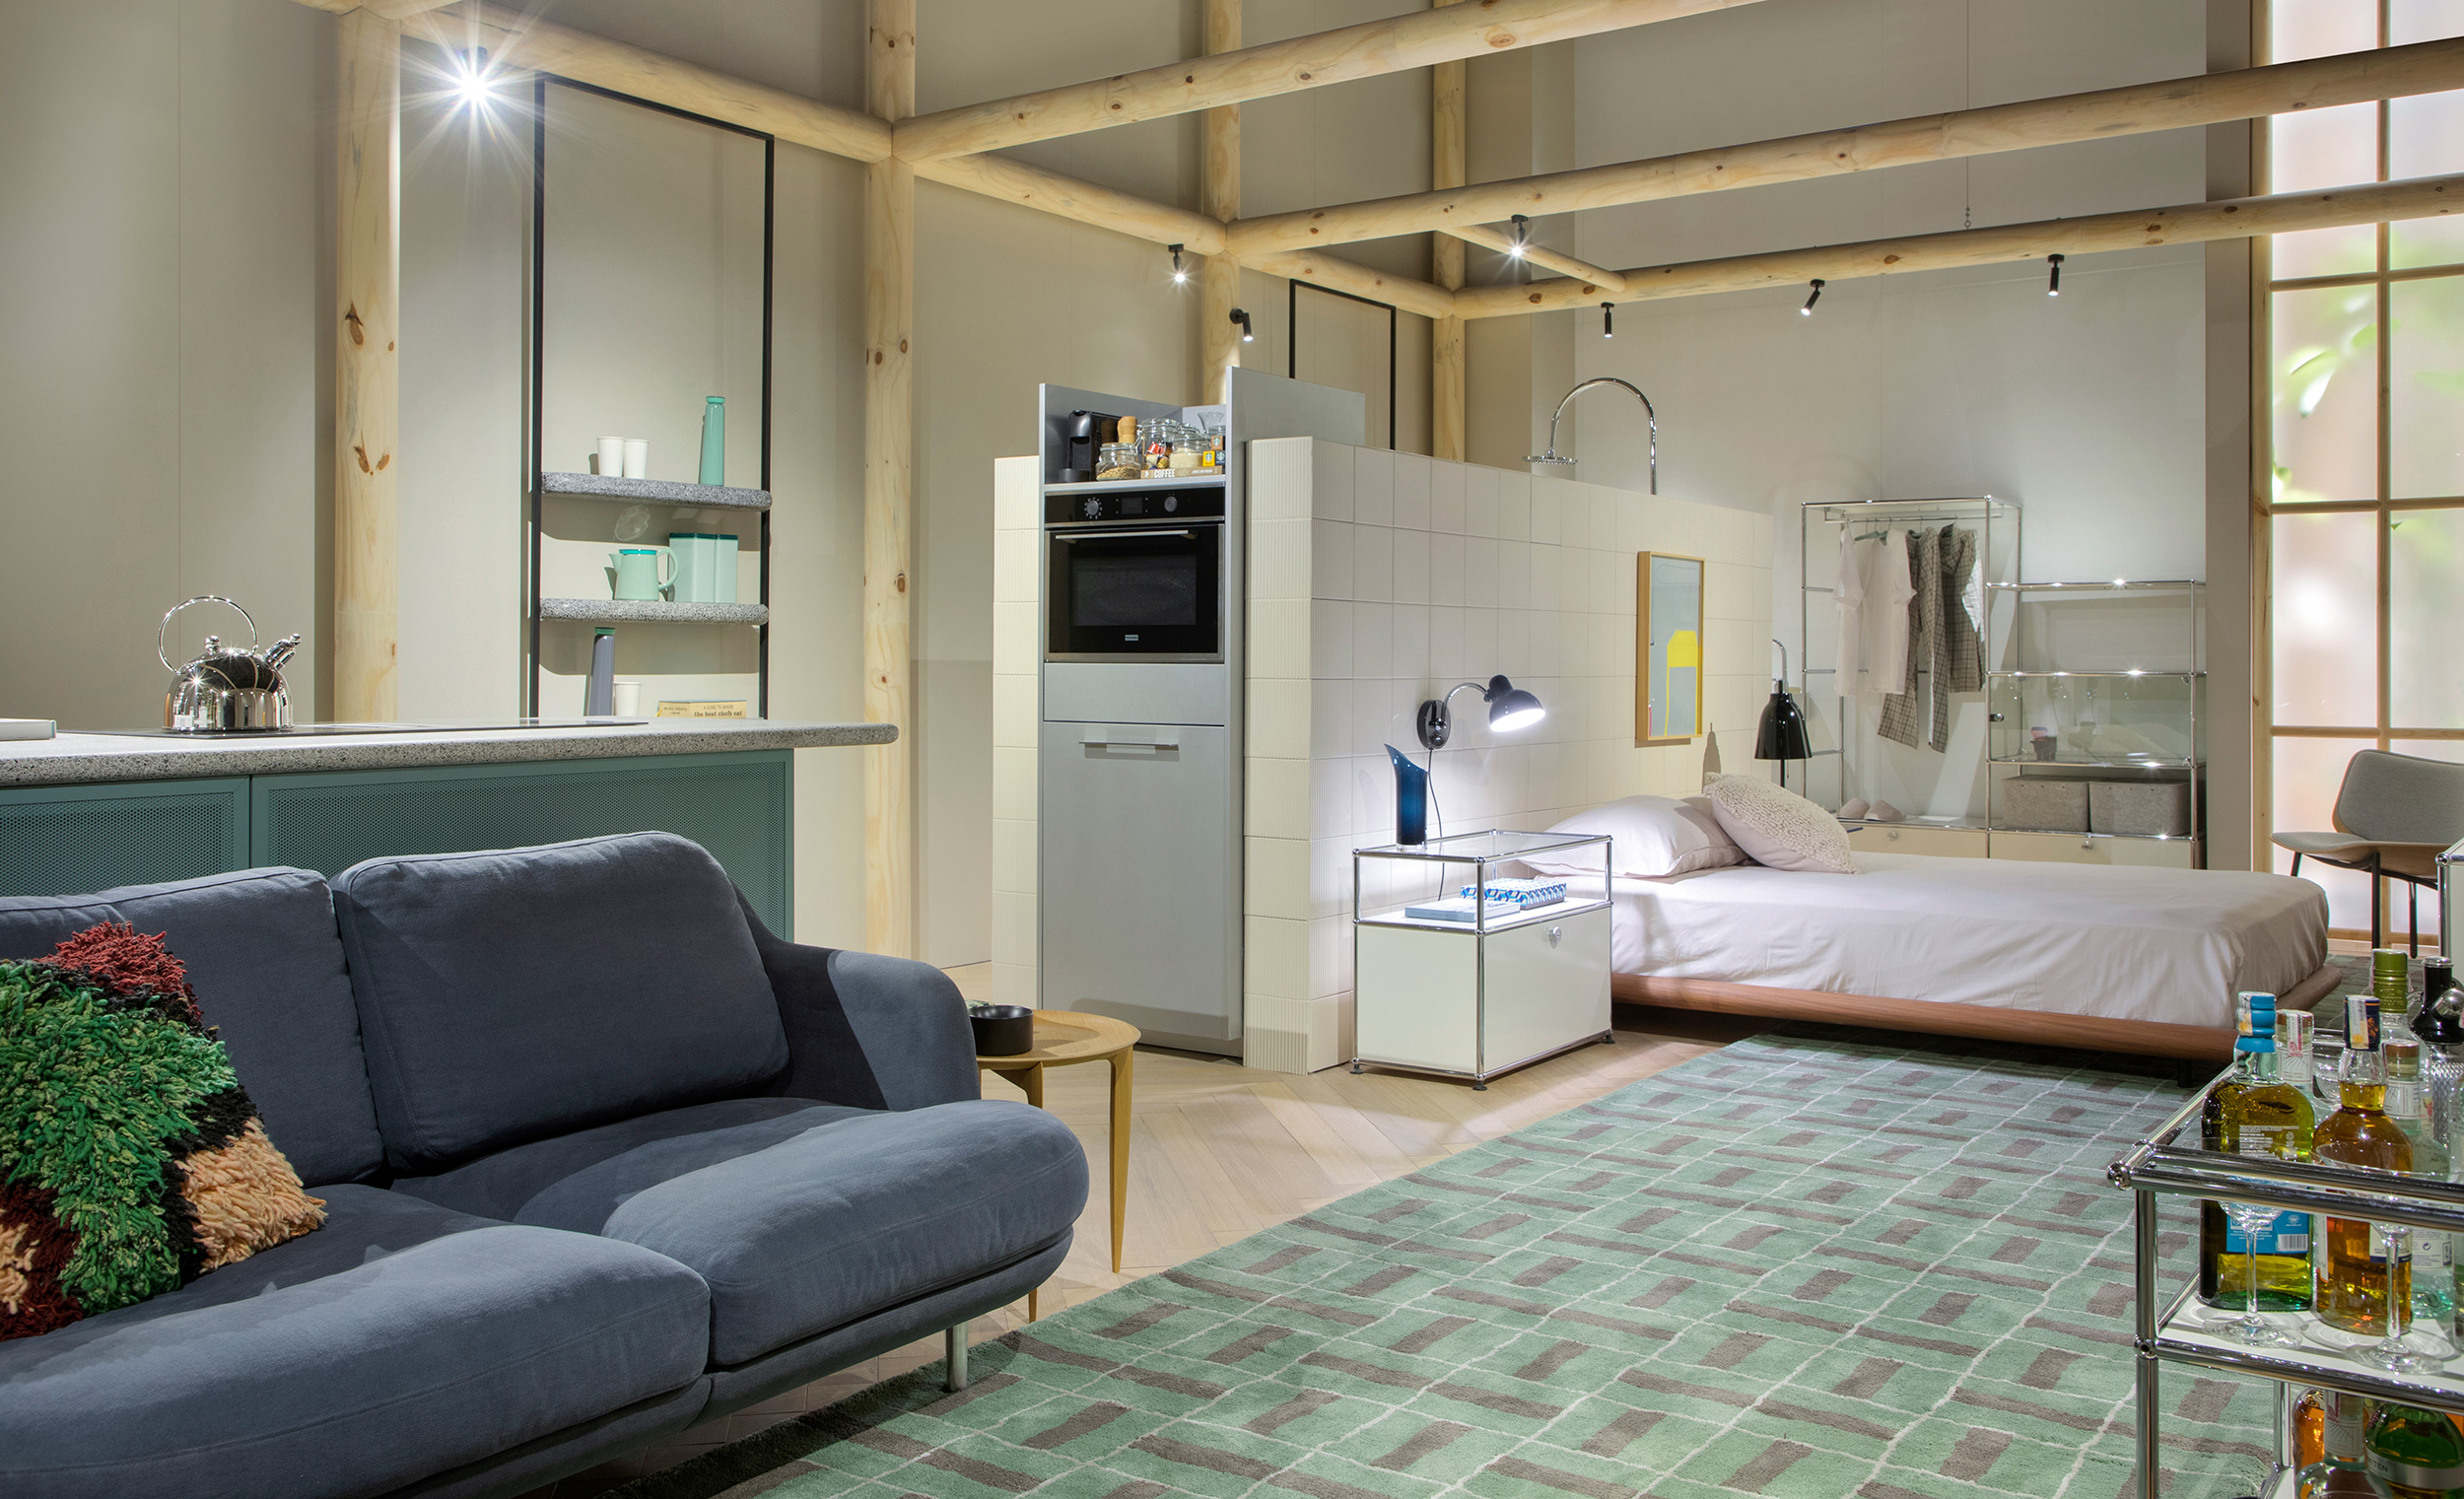 tufi mousse arquitetura studio alfi casacor sao paulo 2022 decor mostra decoracao quarto sofa estudio